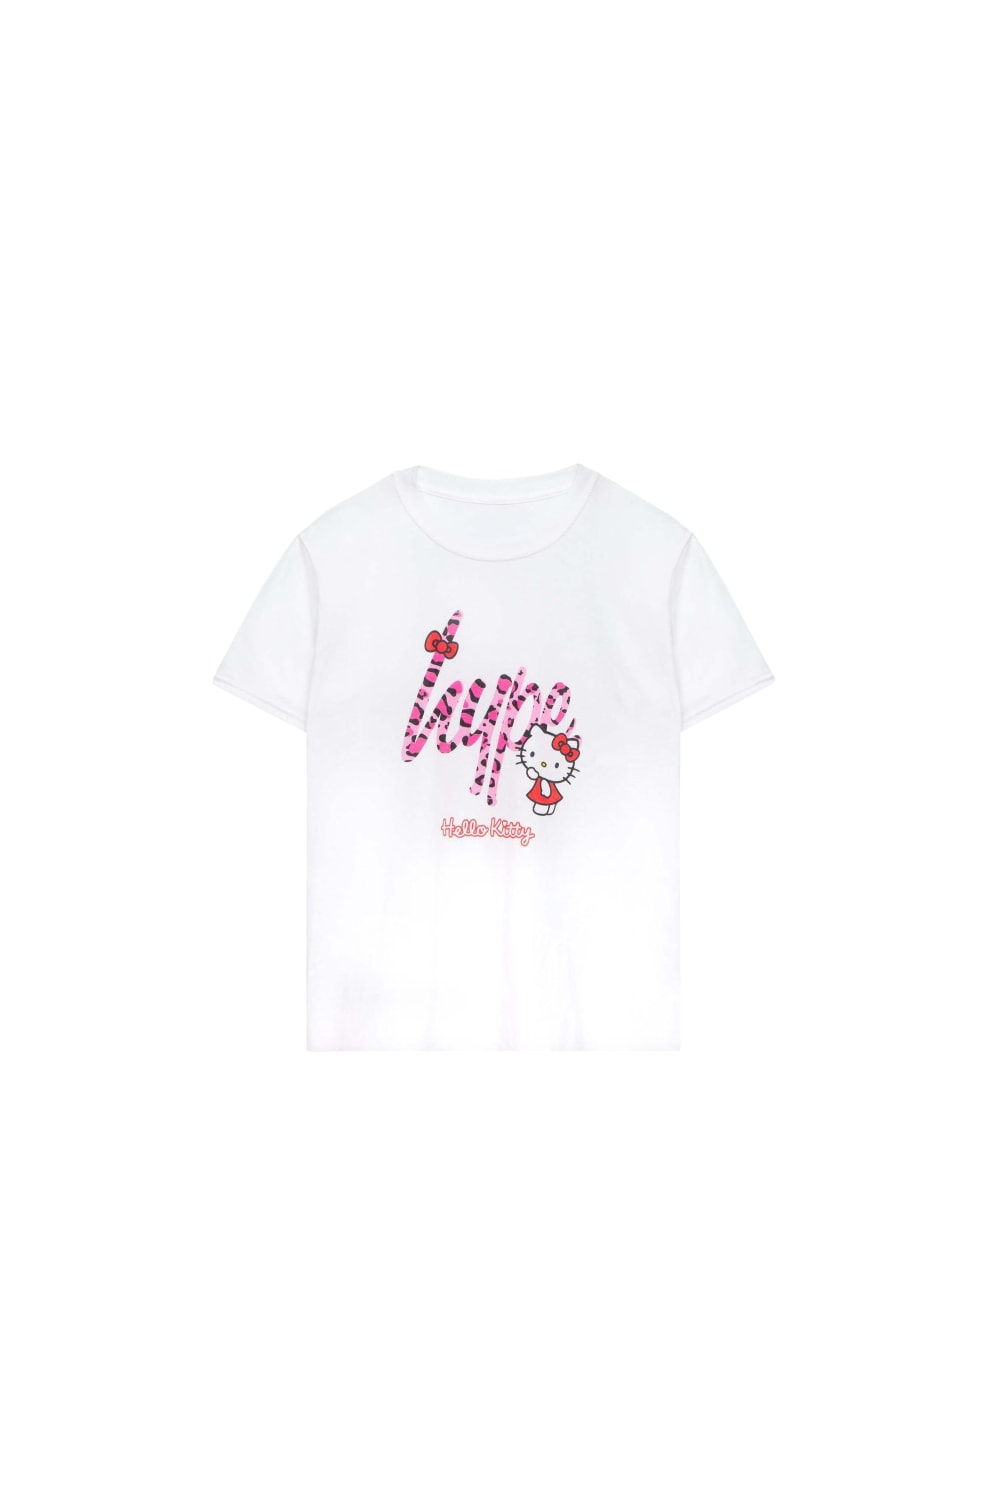 Hype Girls Hello Kitty Leopard Print T-Shirt